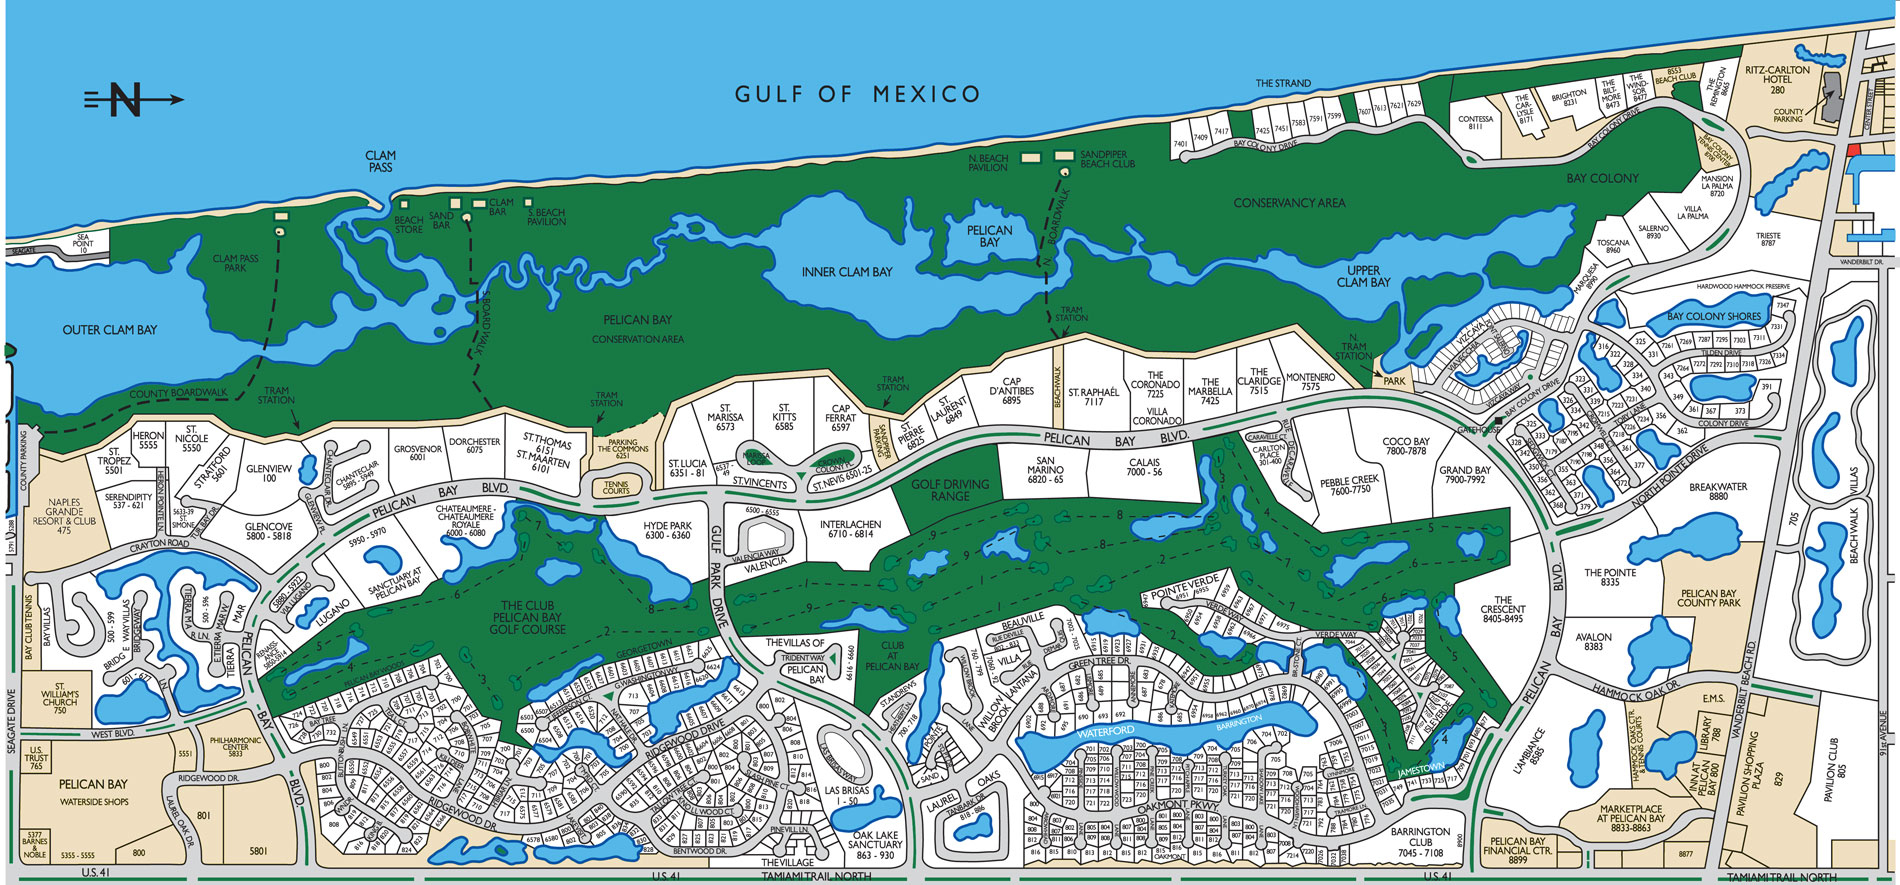 Marquesa Pelican Bay Naples, Florida - Pelican Bay Florida Map